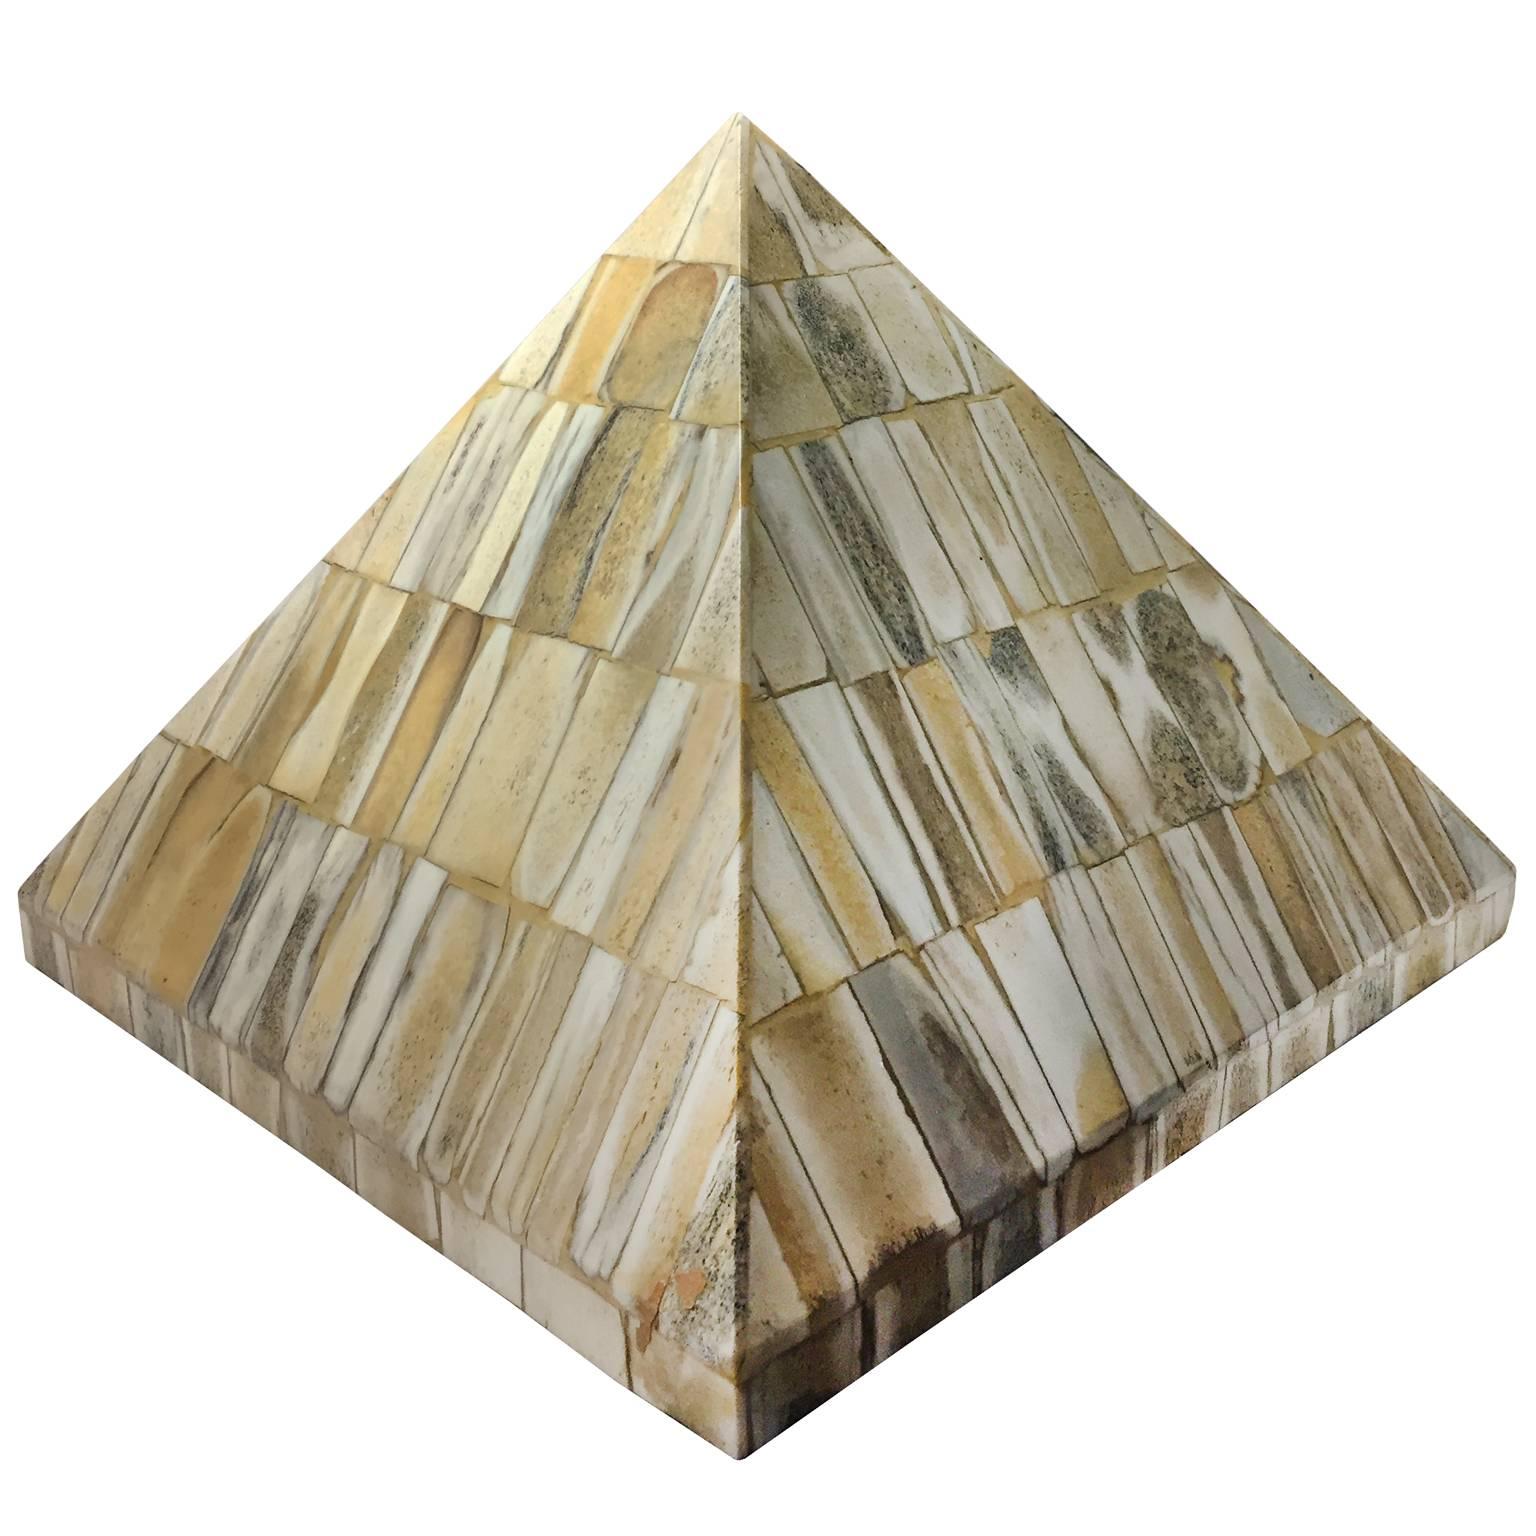 Decorative tiled bone pyramid. USA, 1970's. 